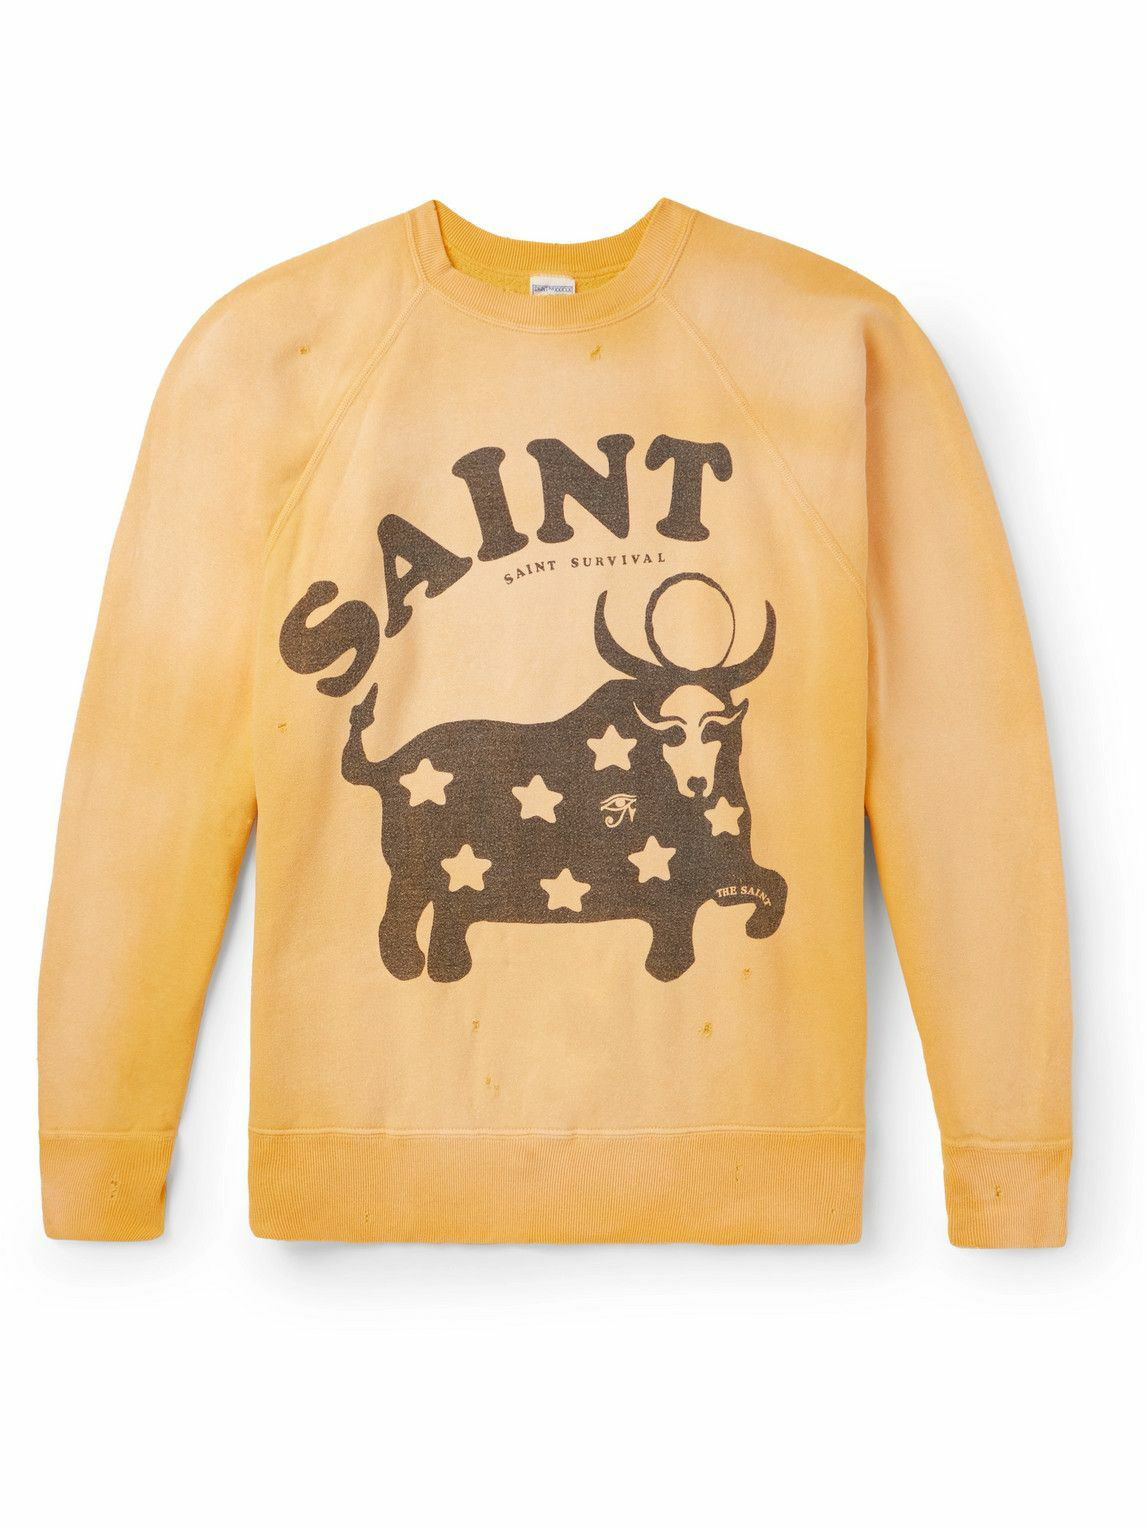 Photo: SAINT Mxxxxxx - Distressed Printed Cotton-Jersey Sweatshirt - Yellow